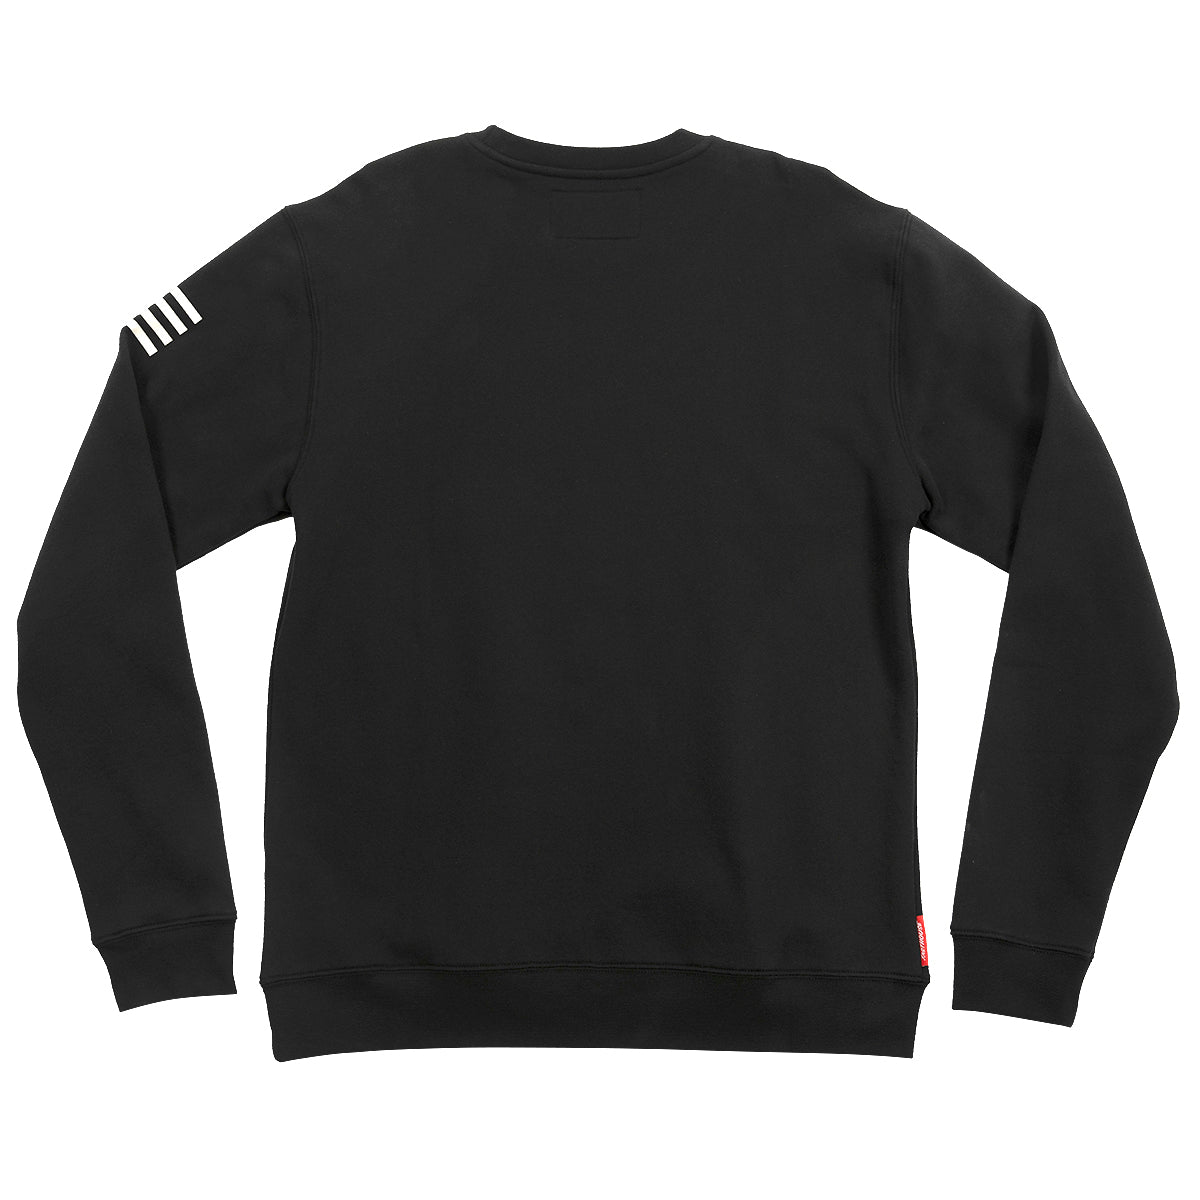 Umbra Fleece Crew Neck Pullover - Black